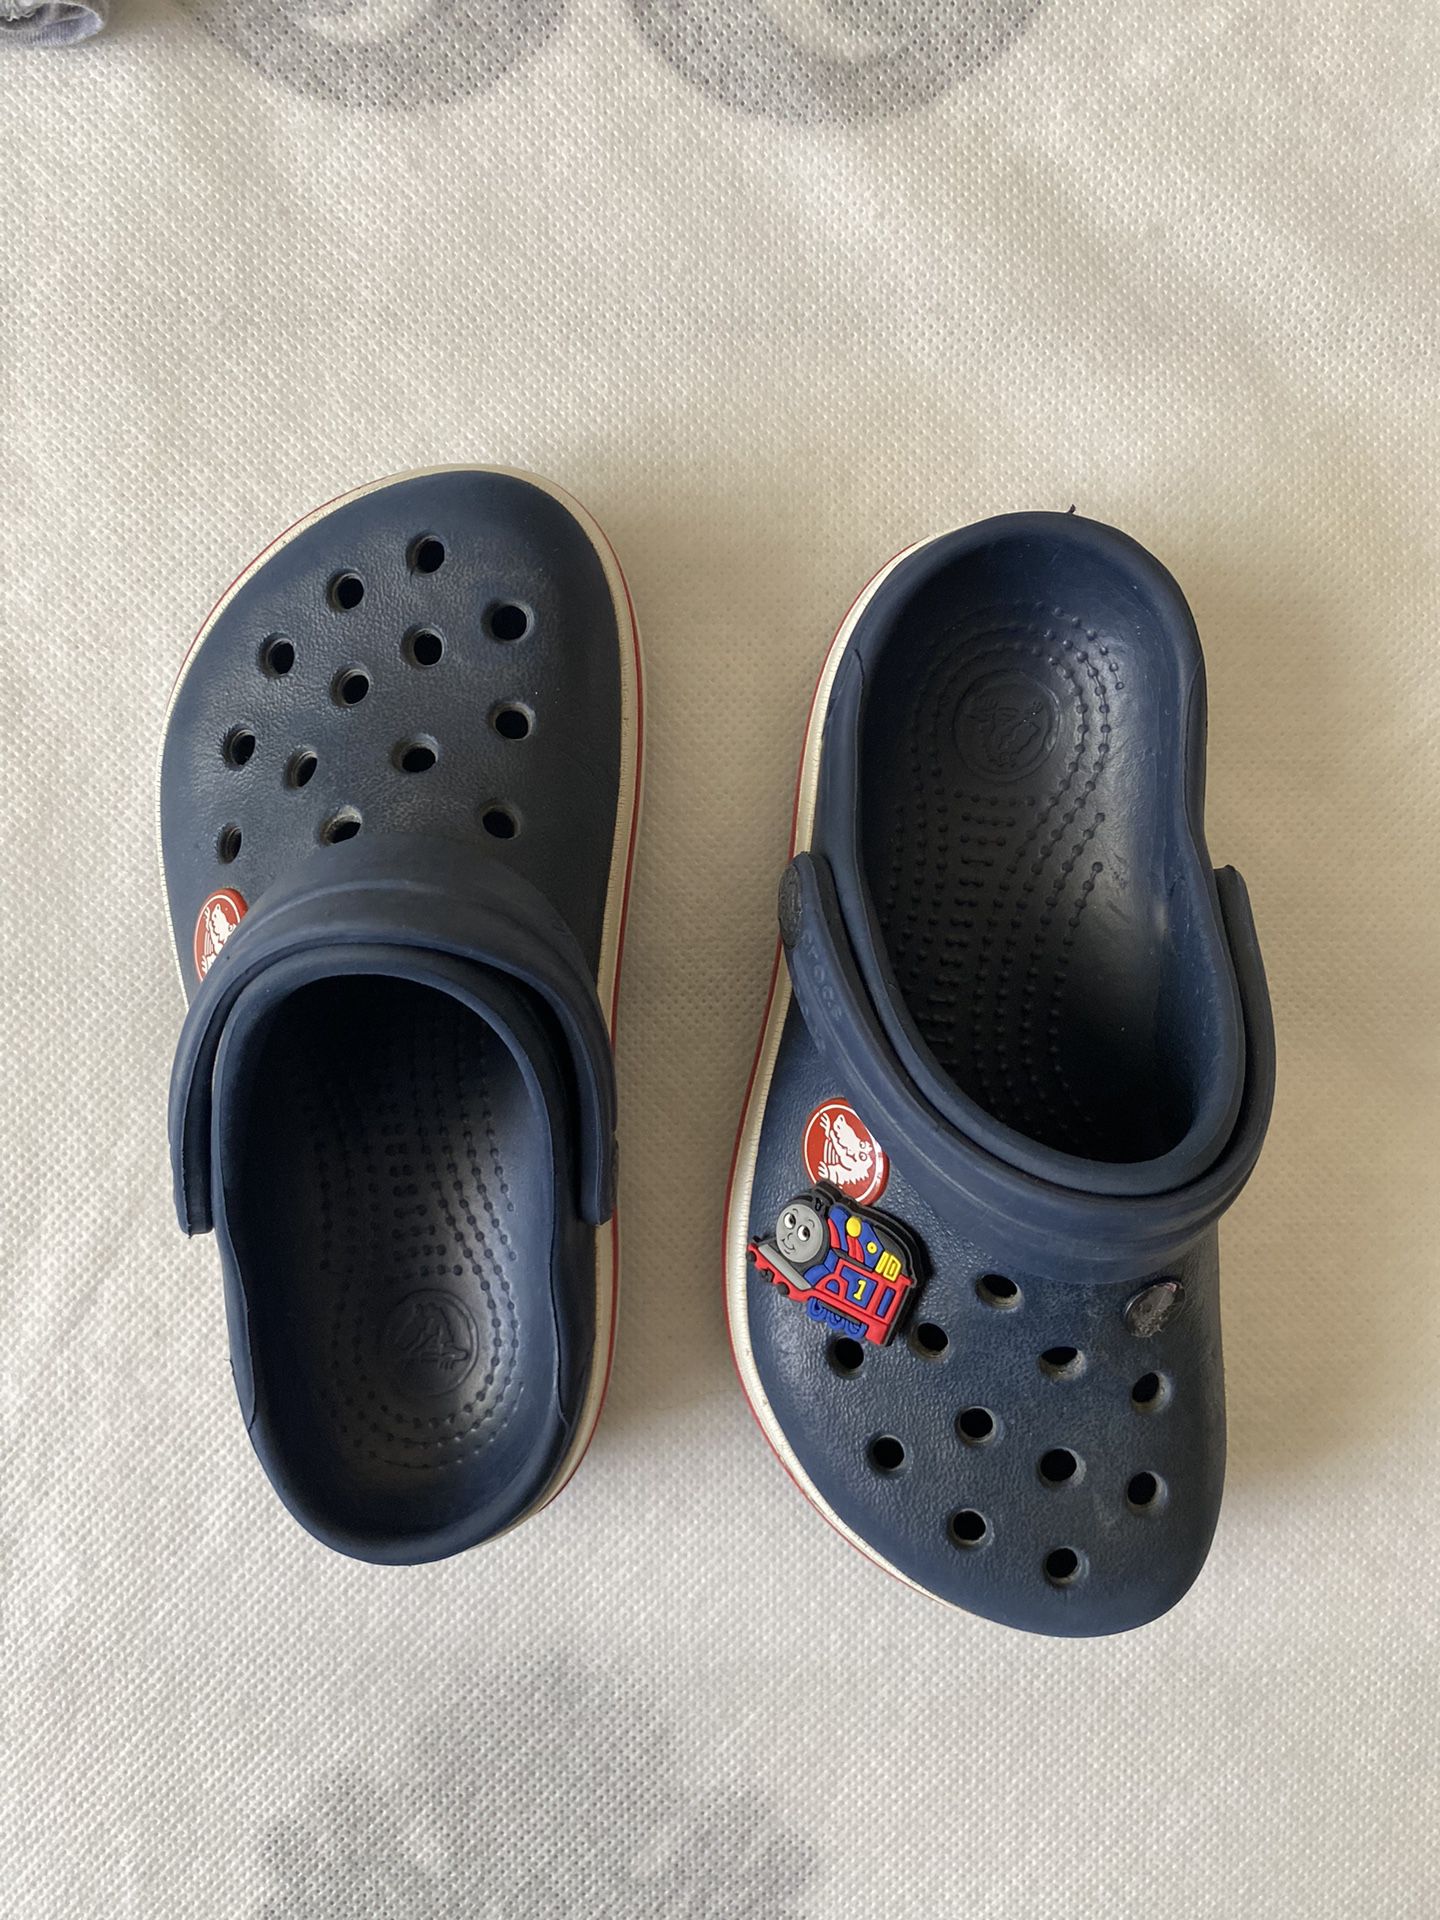 Toddler Crocs Shoes 7